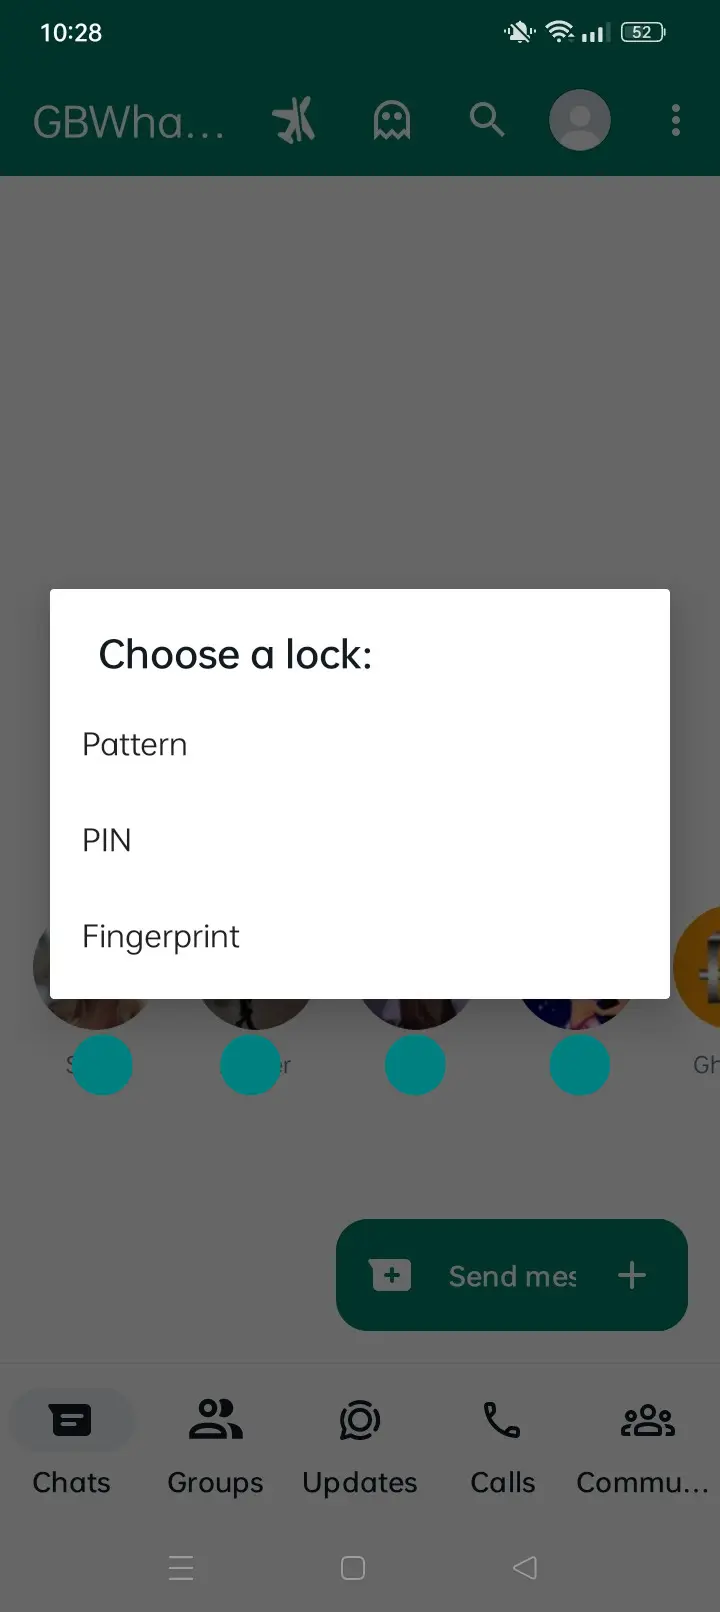 gb whatsapp pro lock feature